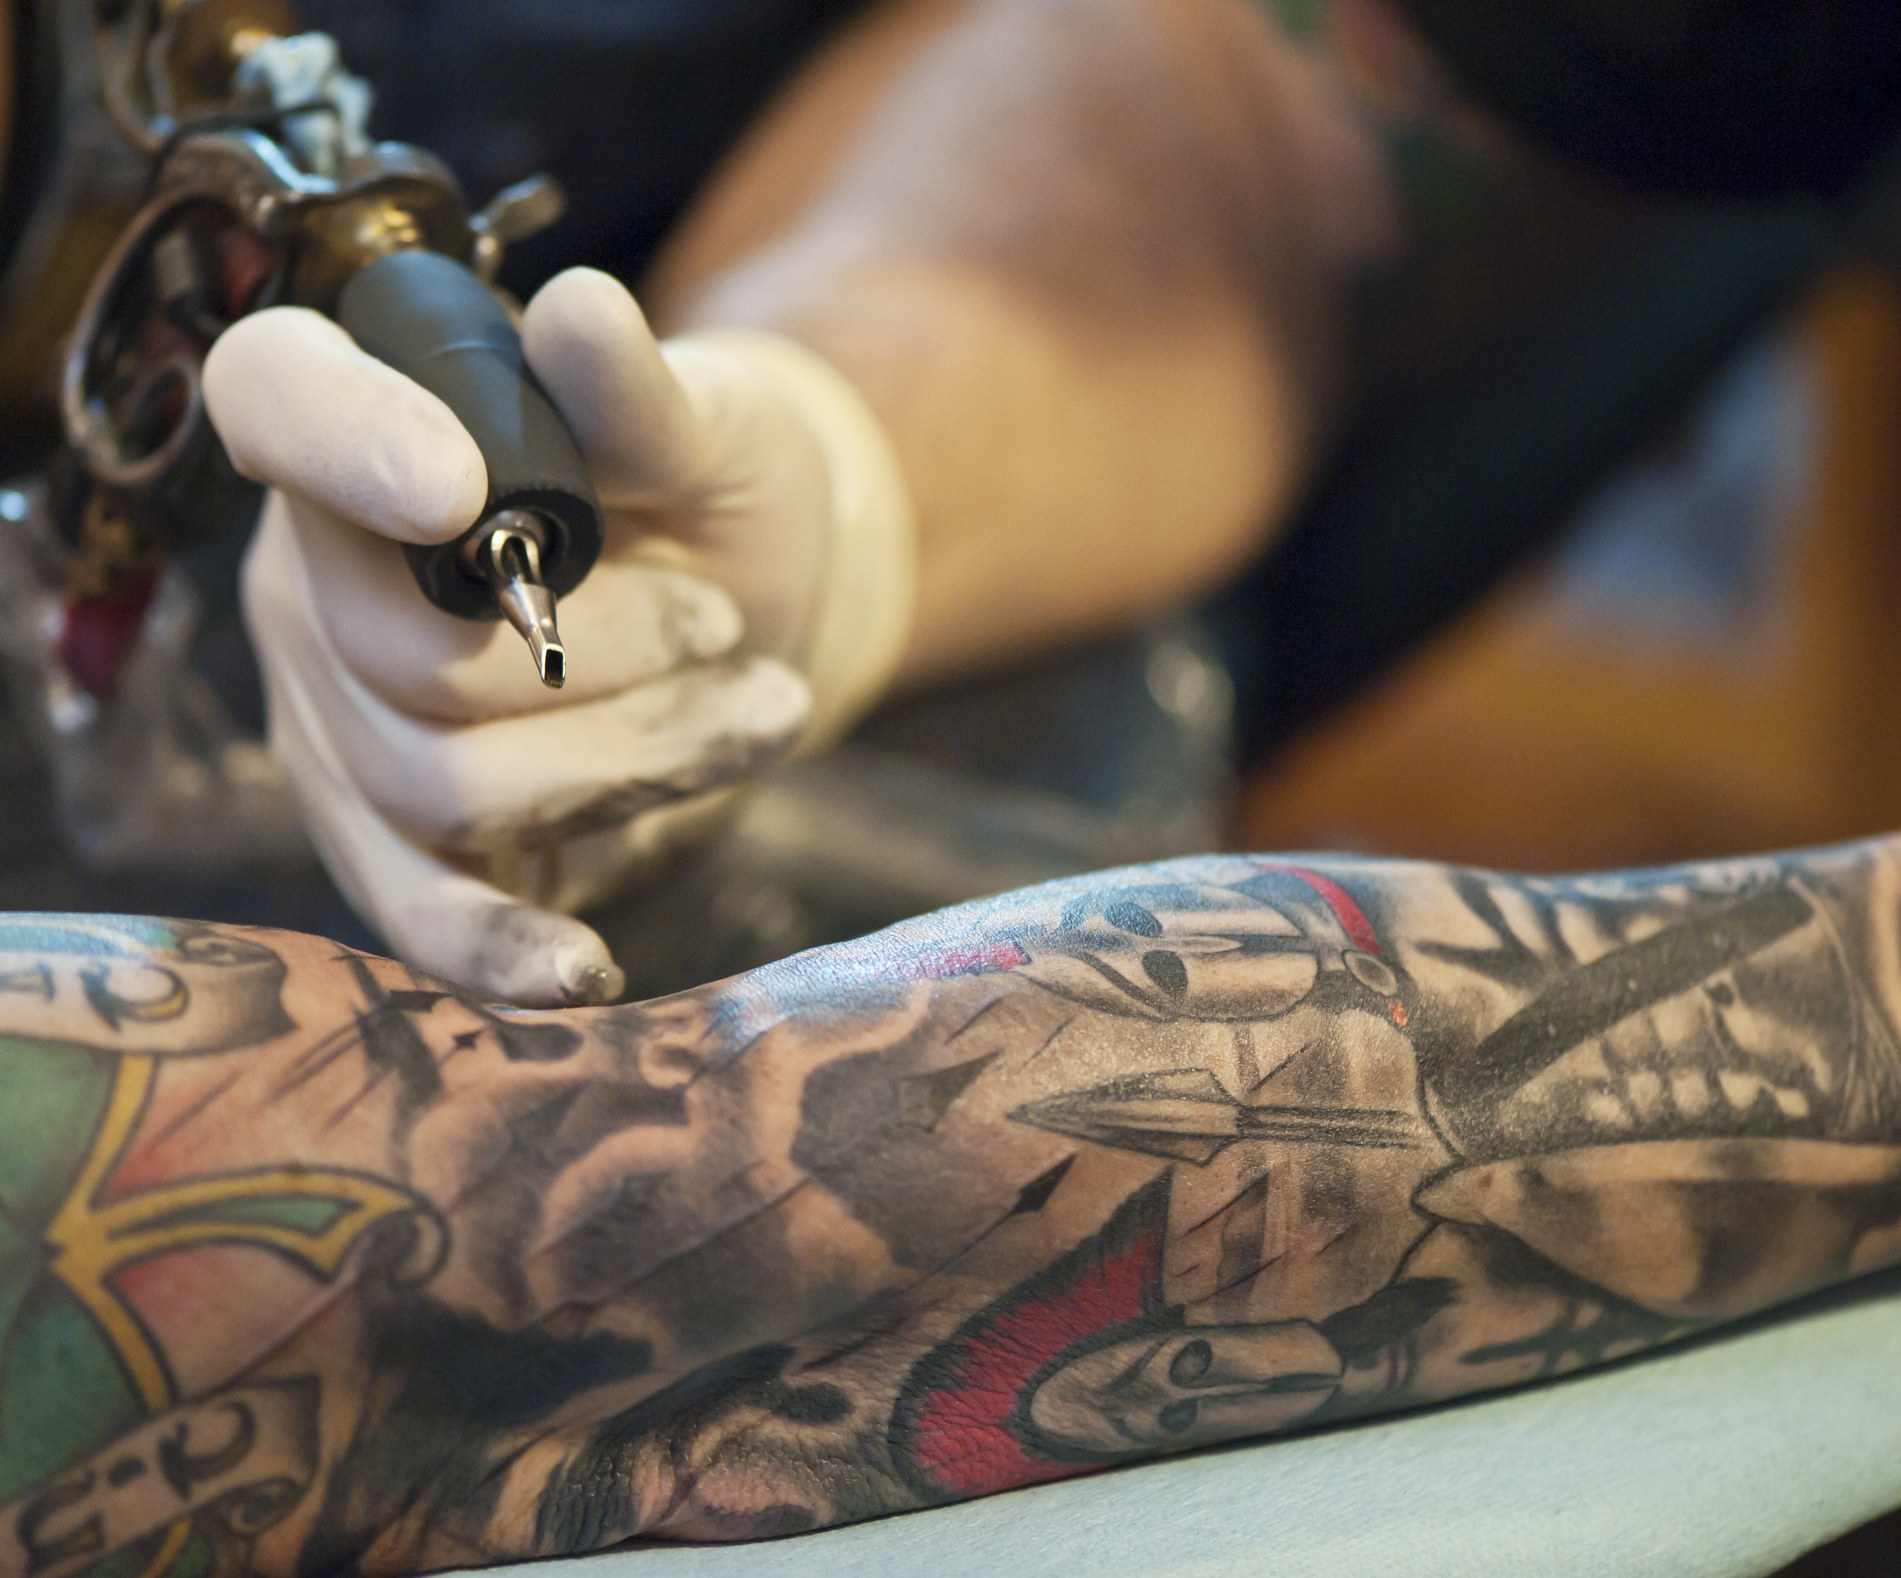 A tattoo artist working on someone&#x27;s arm